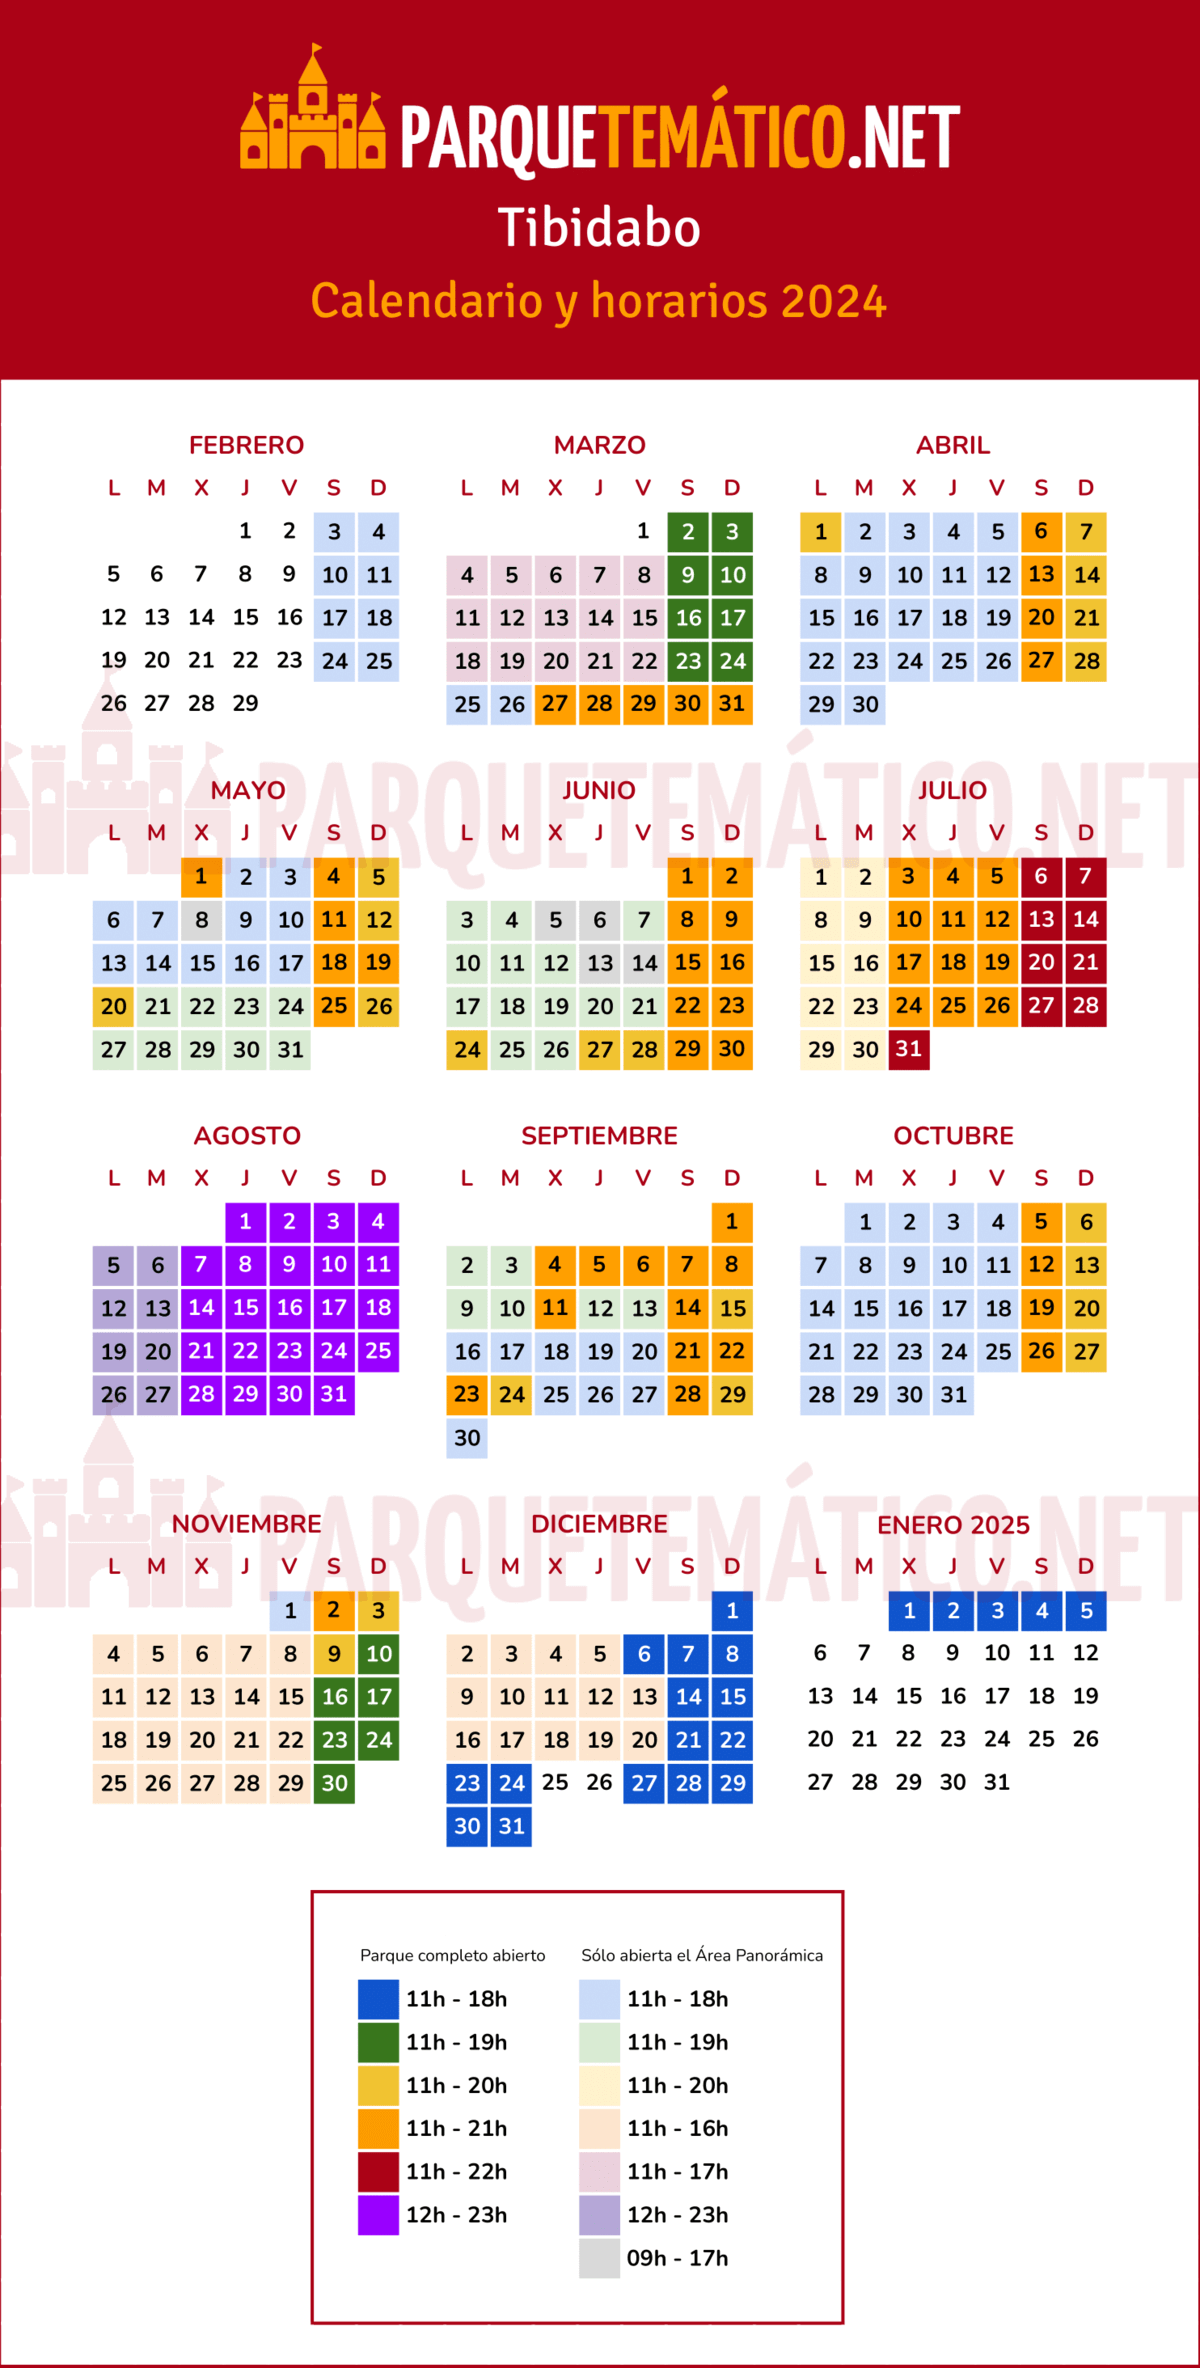 Calendario y horarios de Tibidabo 2024